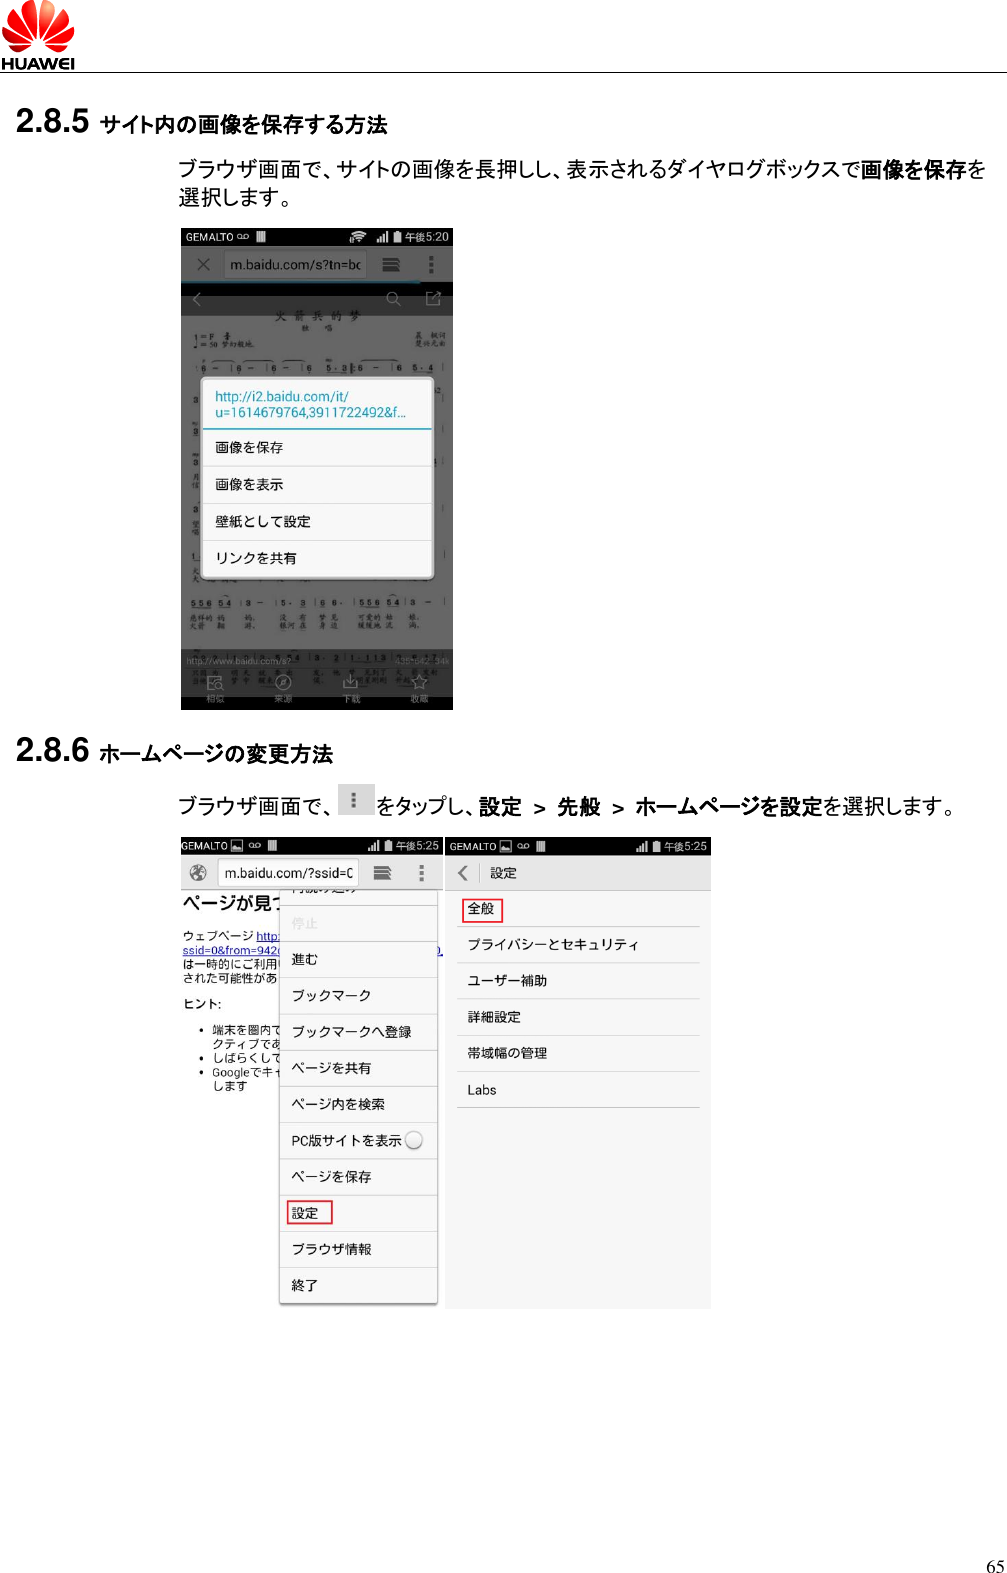 Huawei G6s L02 Smartphone Faqs Jp V1 7